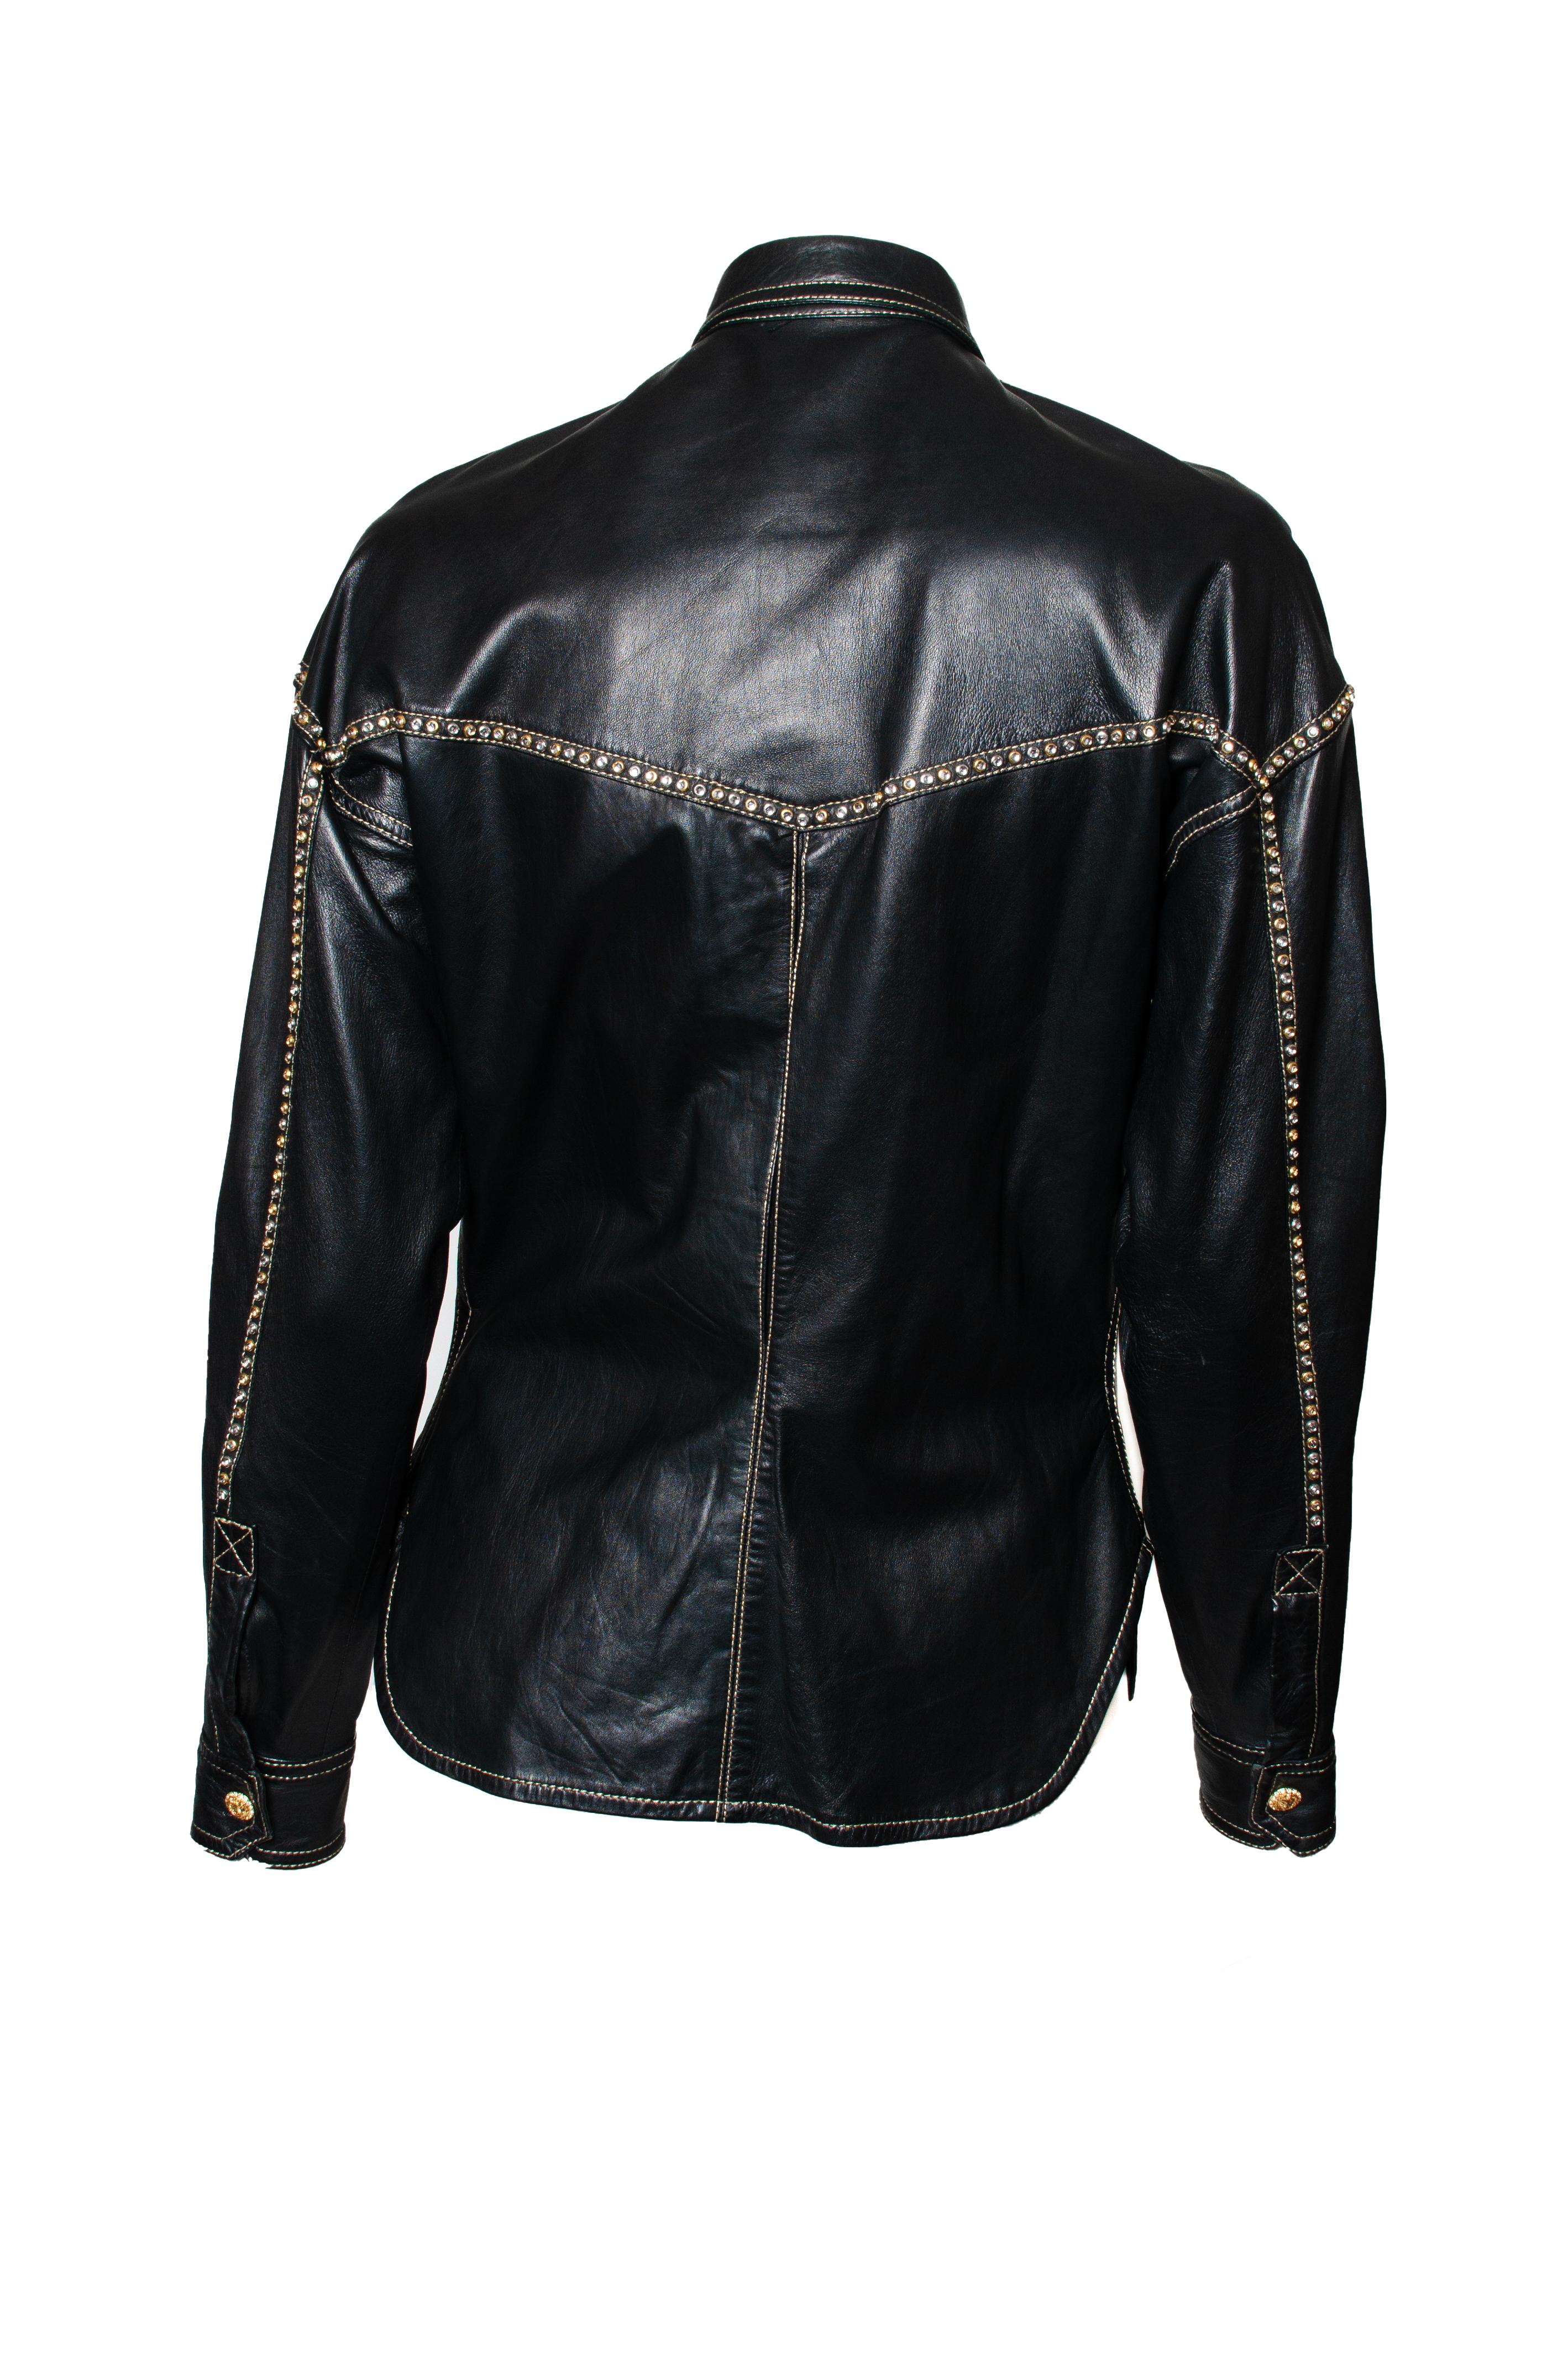 dravus leather jacket